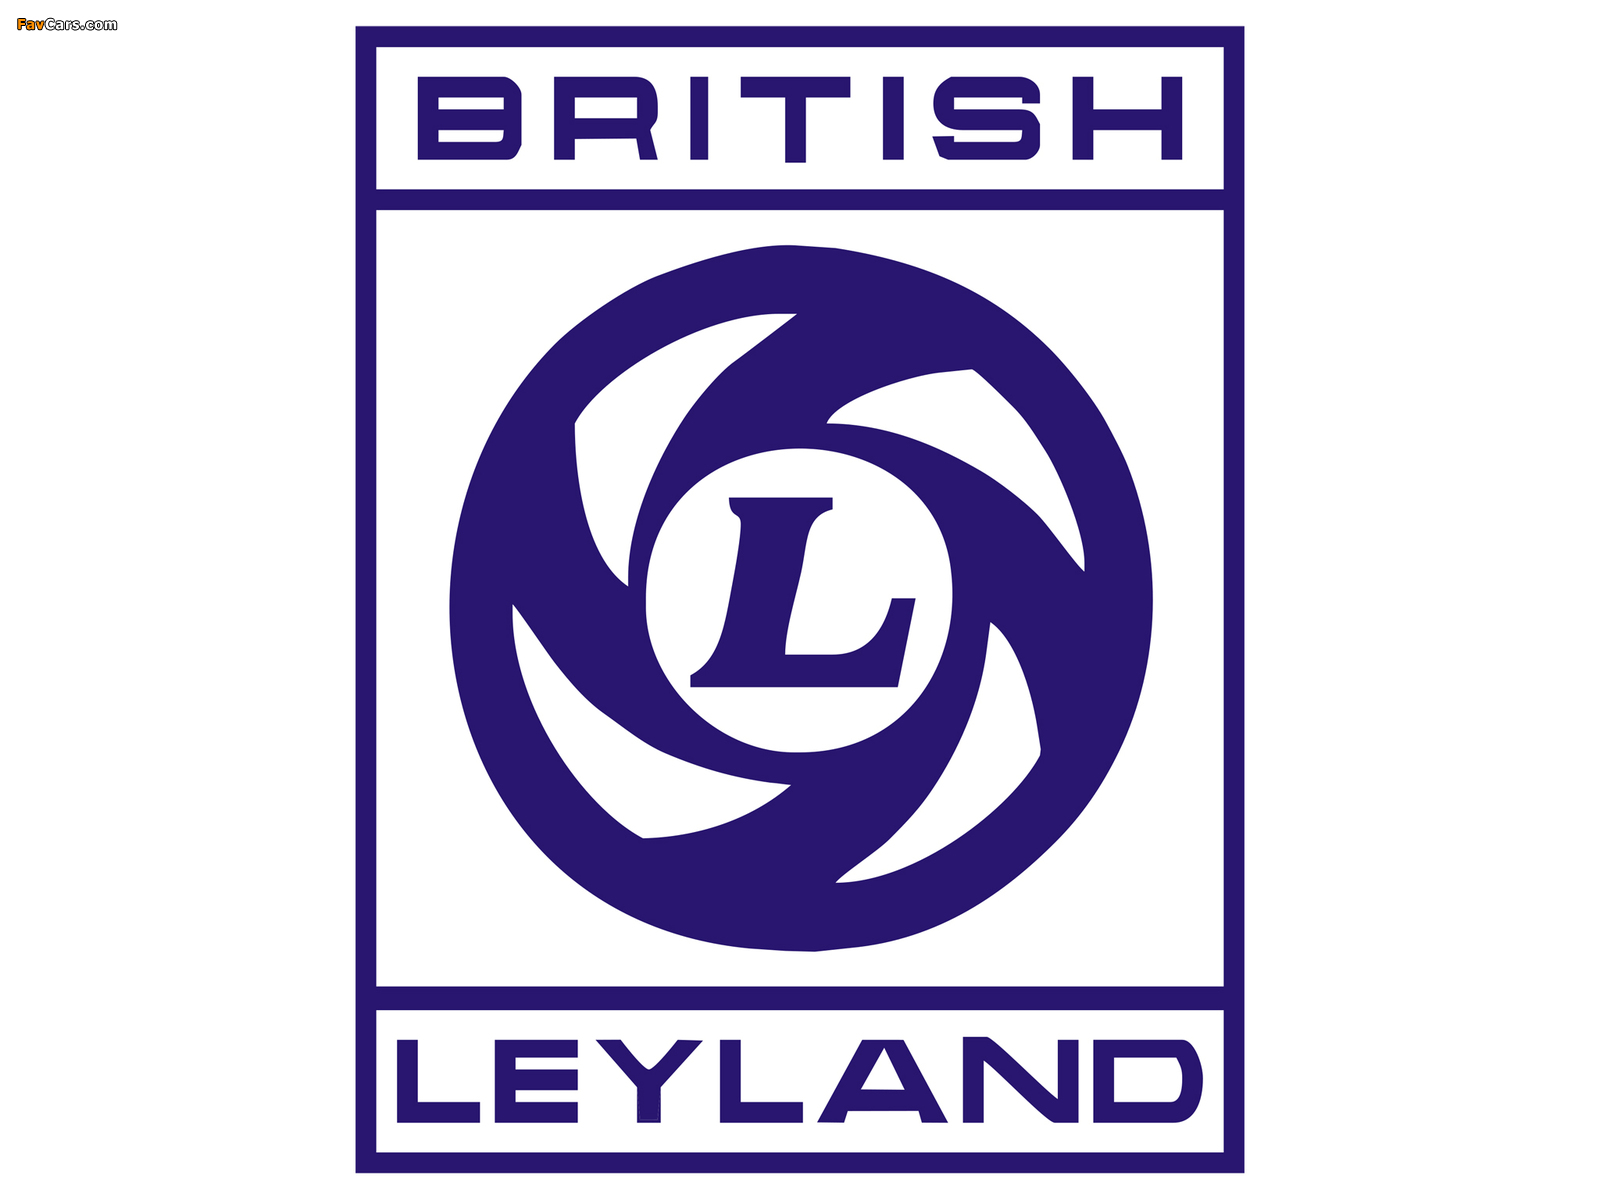 Photos of Leyland (1600 x 1200)